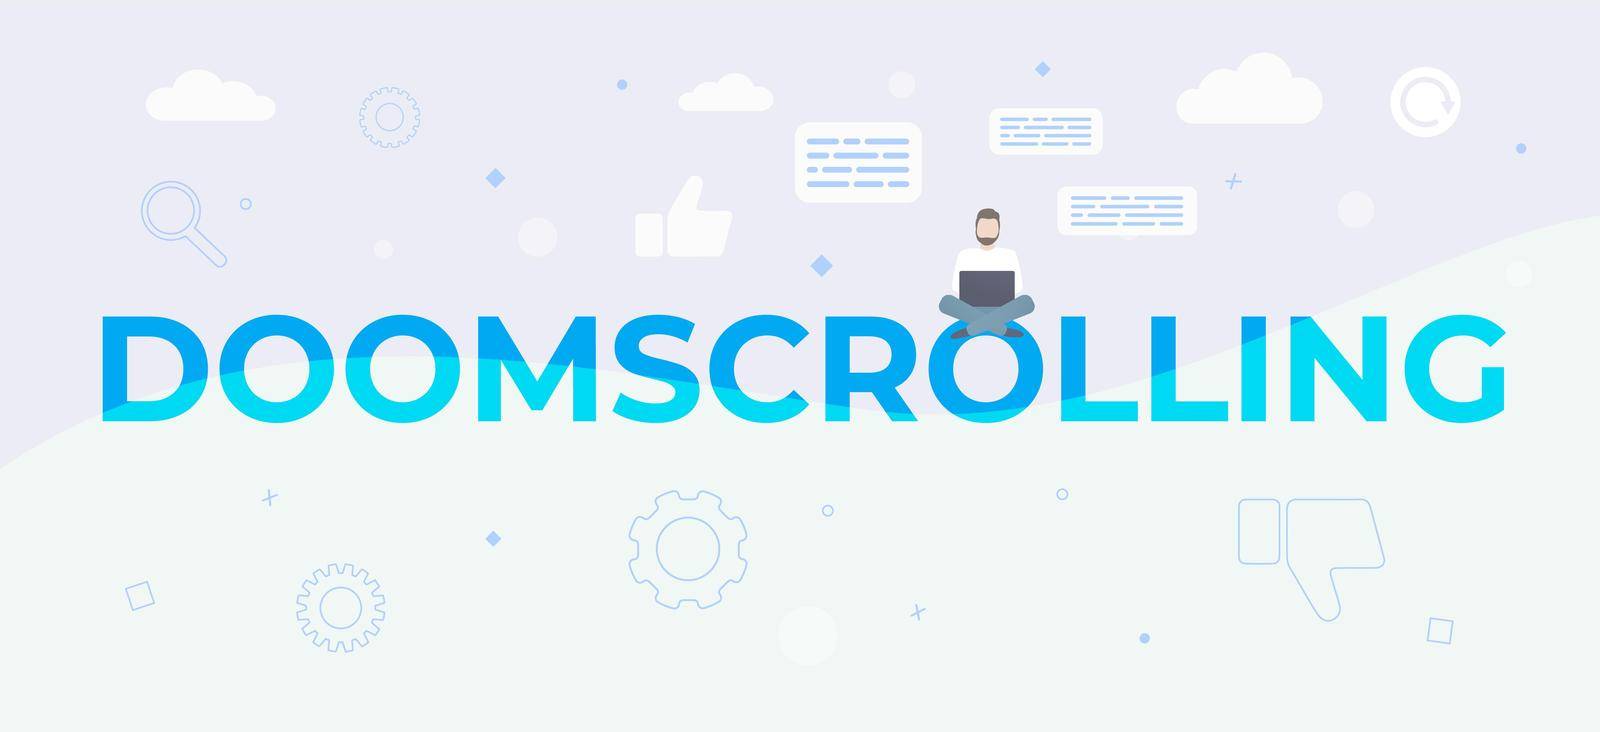 Doomscrolling or doomsurfing concept vector illustration.